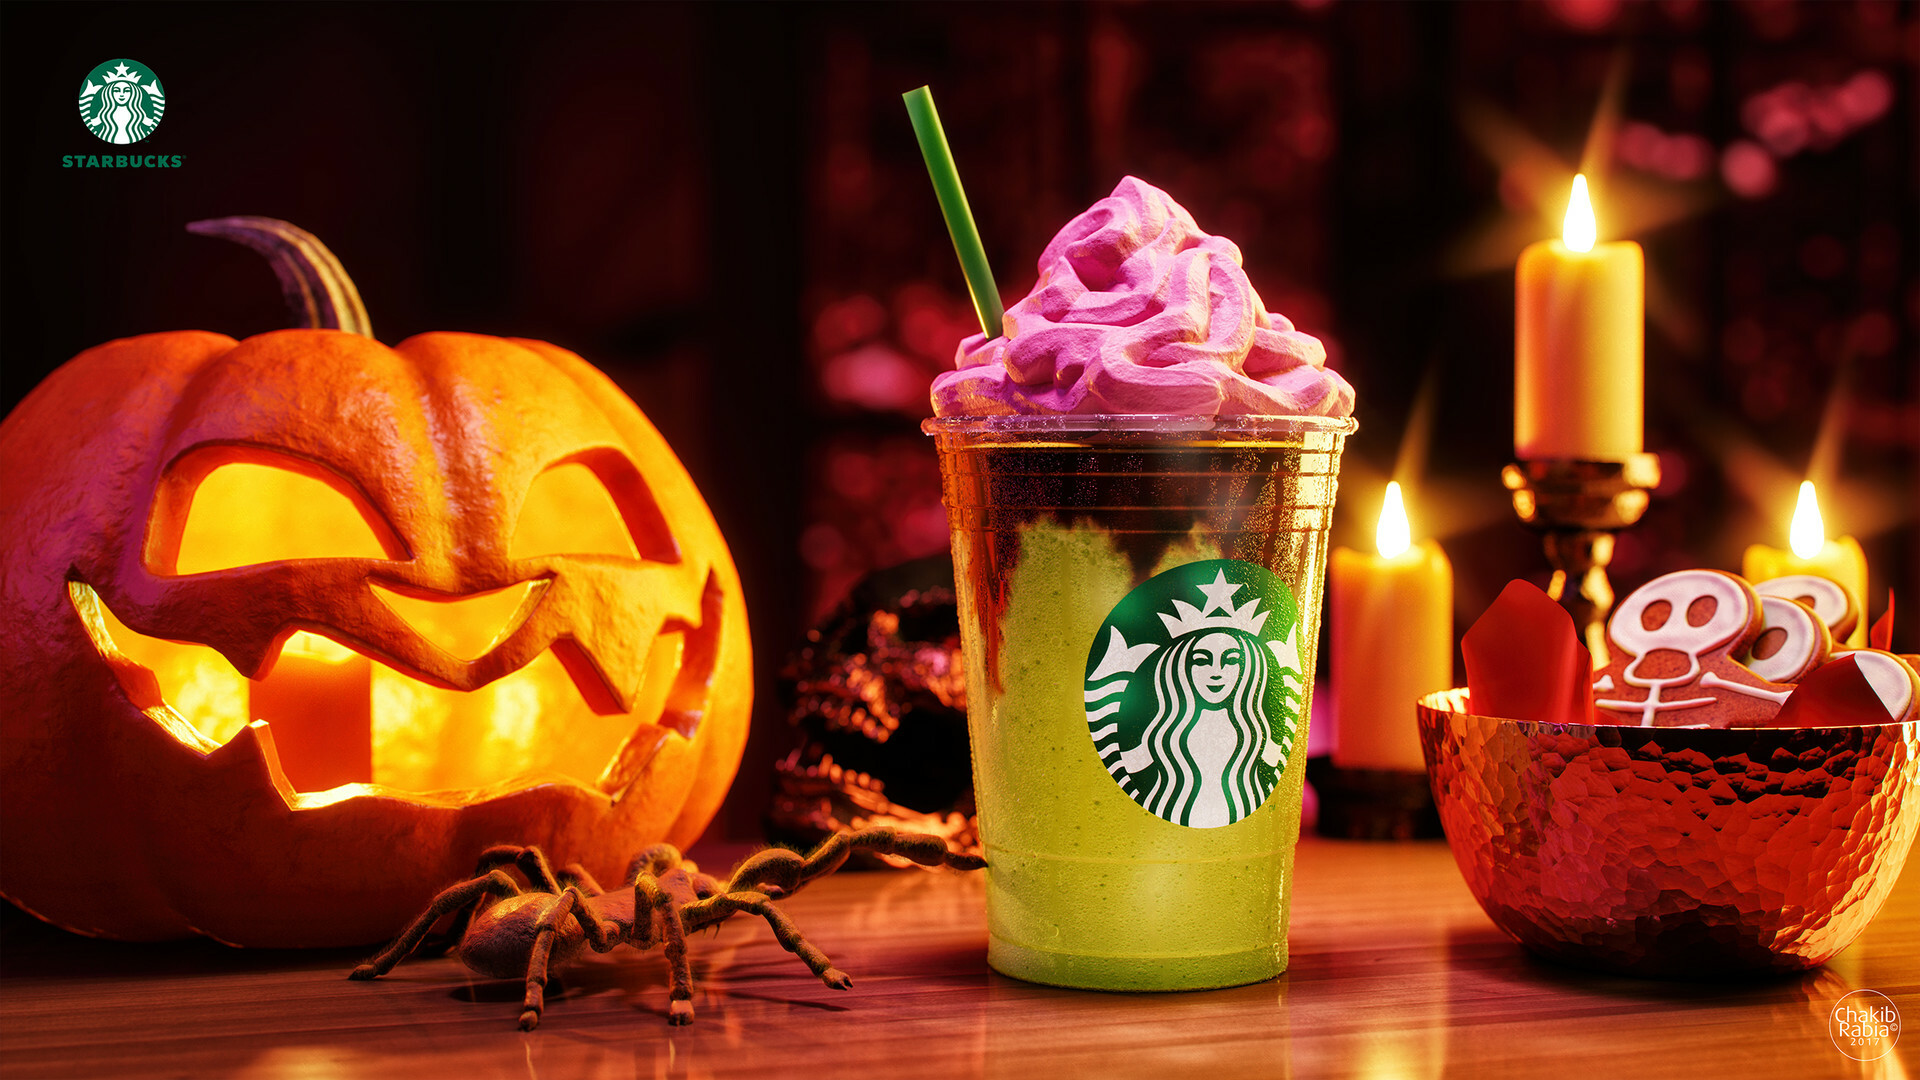 Starbucks: Zombie Frappuccino, Pumpkin, Lighting, Coffee brand. 1920x1080 Full HD Background.